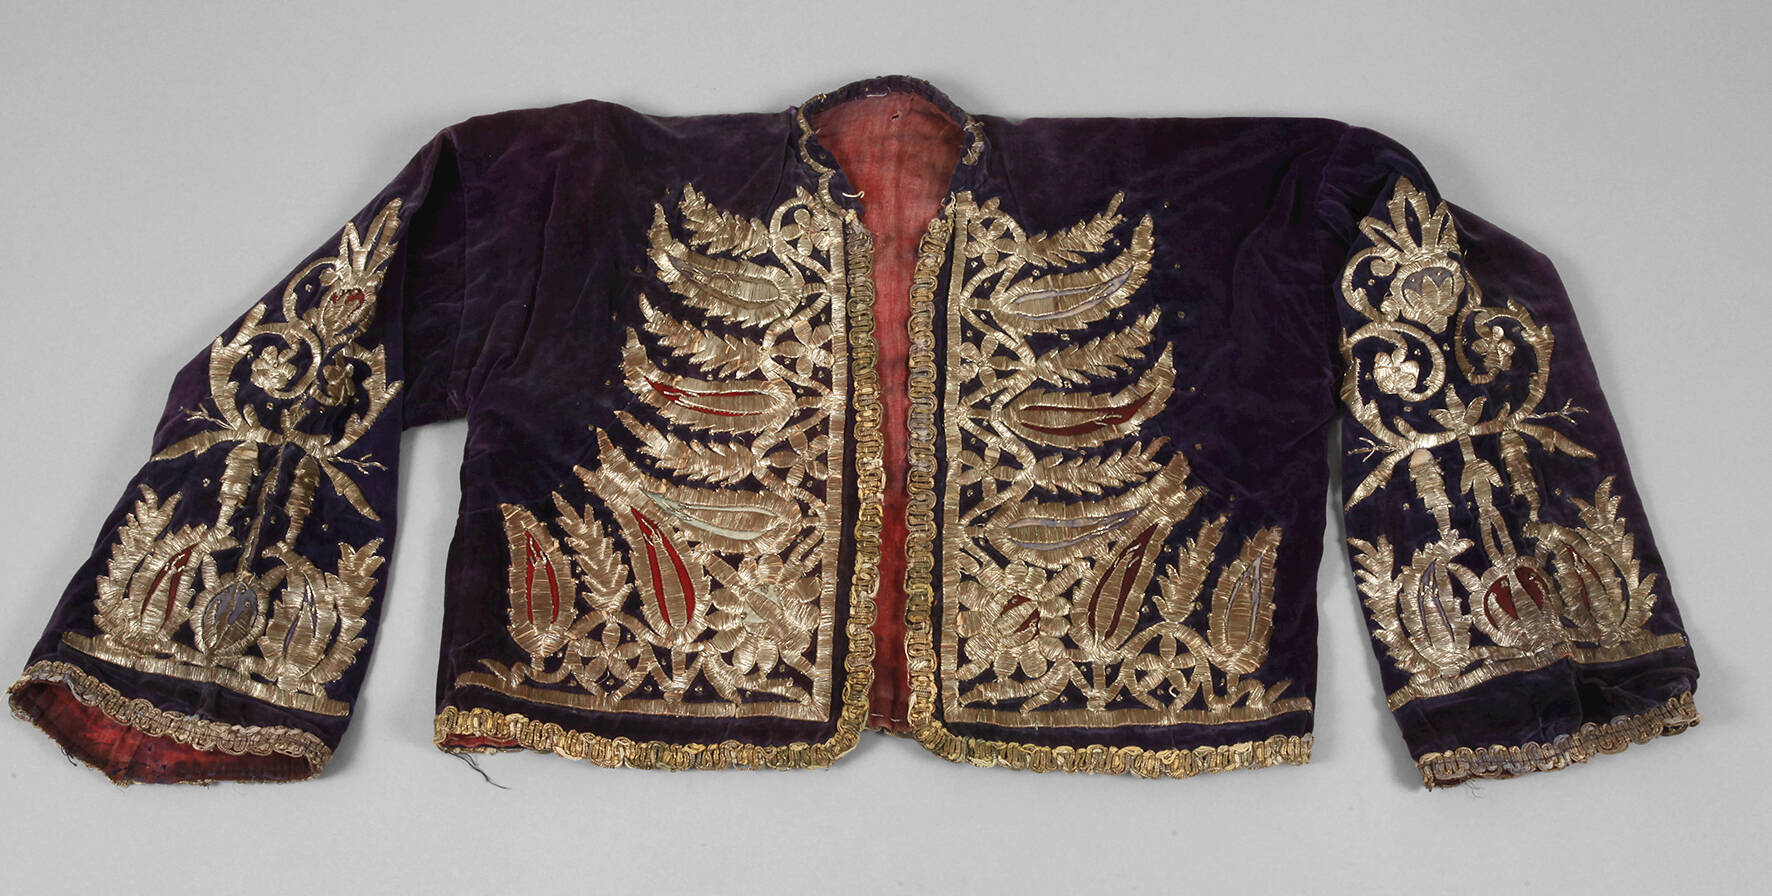 Osmanische Jacke mit Brokatstickerei